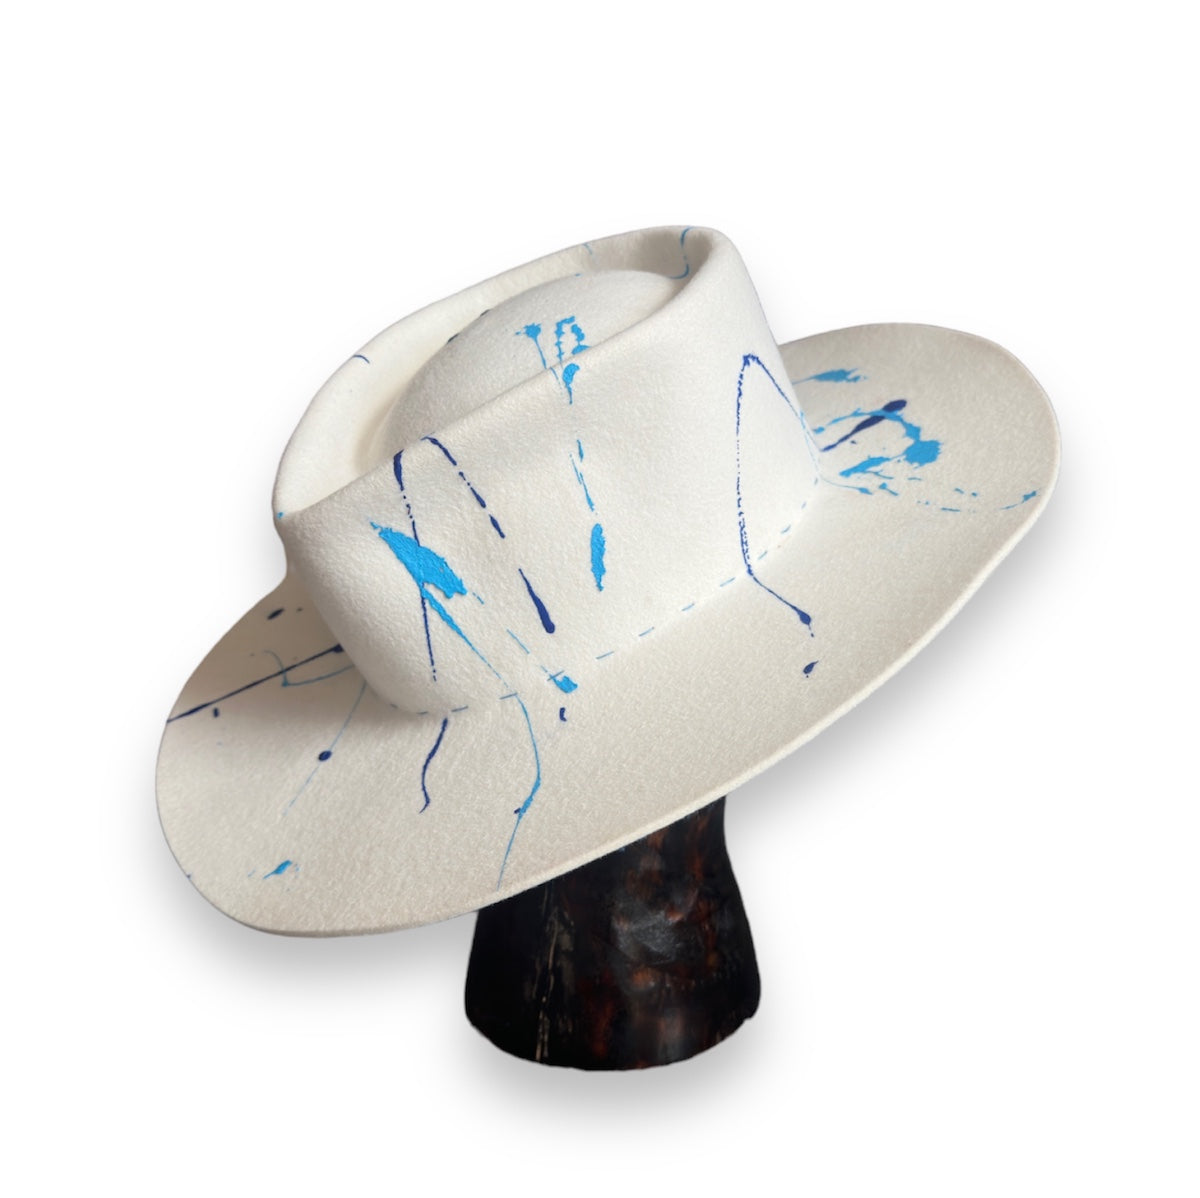 THE ARTIST White Fedora Hat